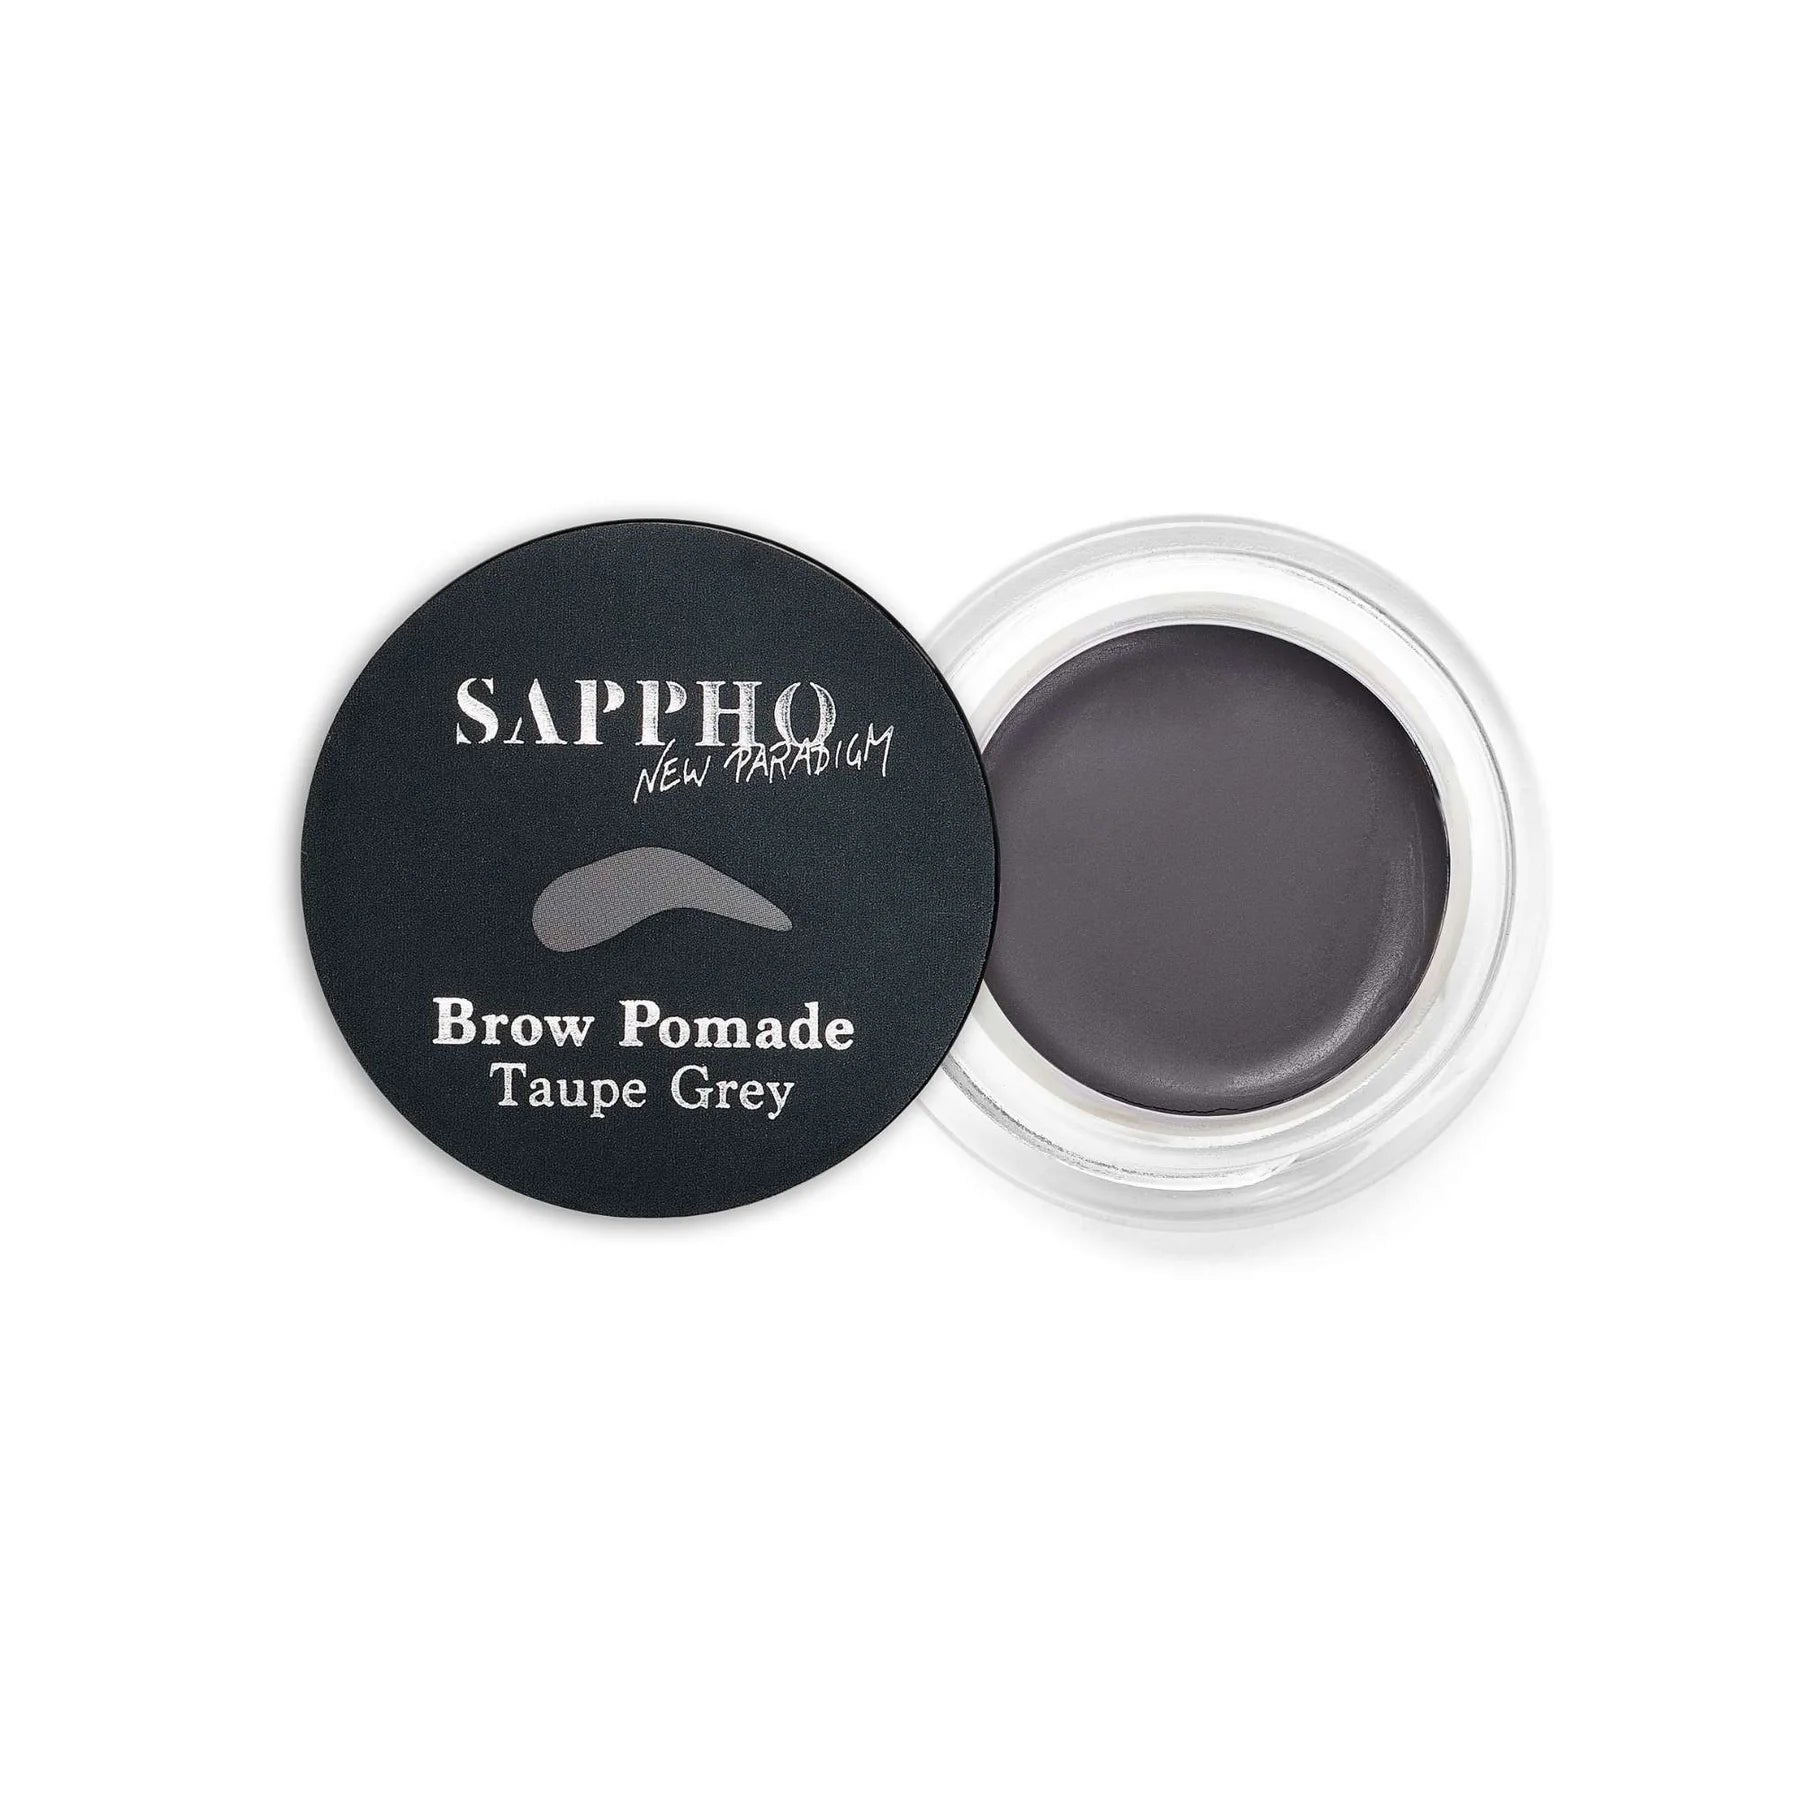 SAPPHO New Paradigm Brow Pomade Taupe Grey